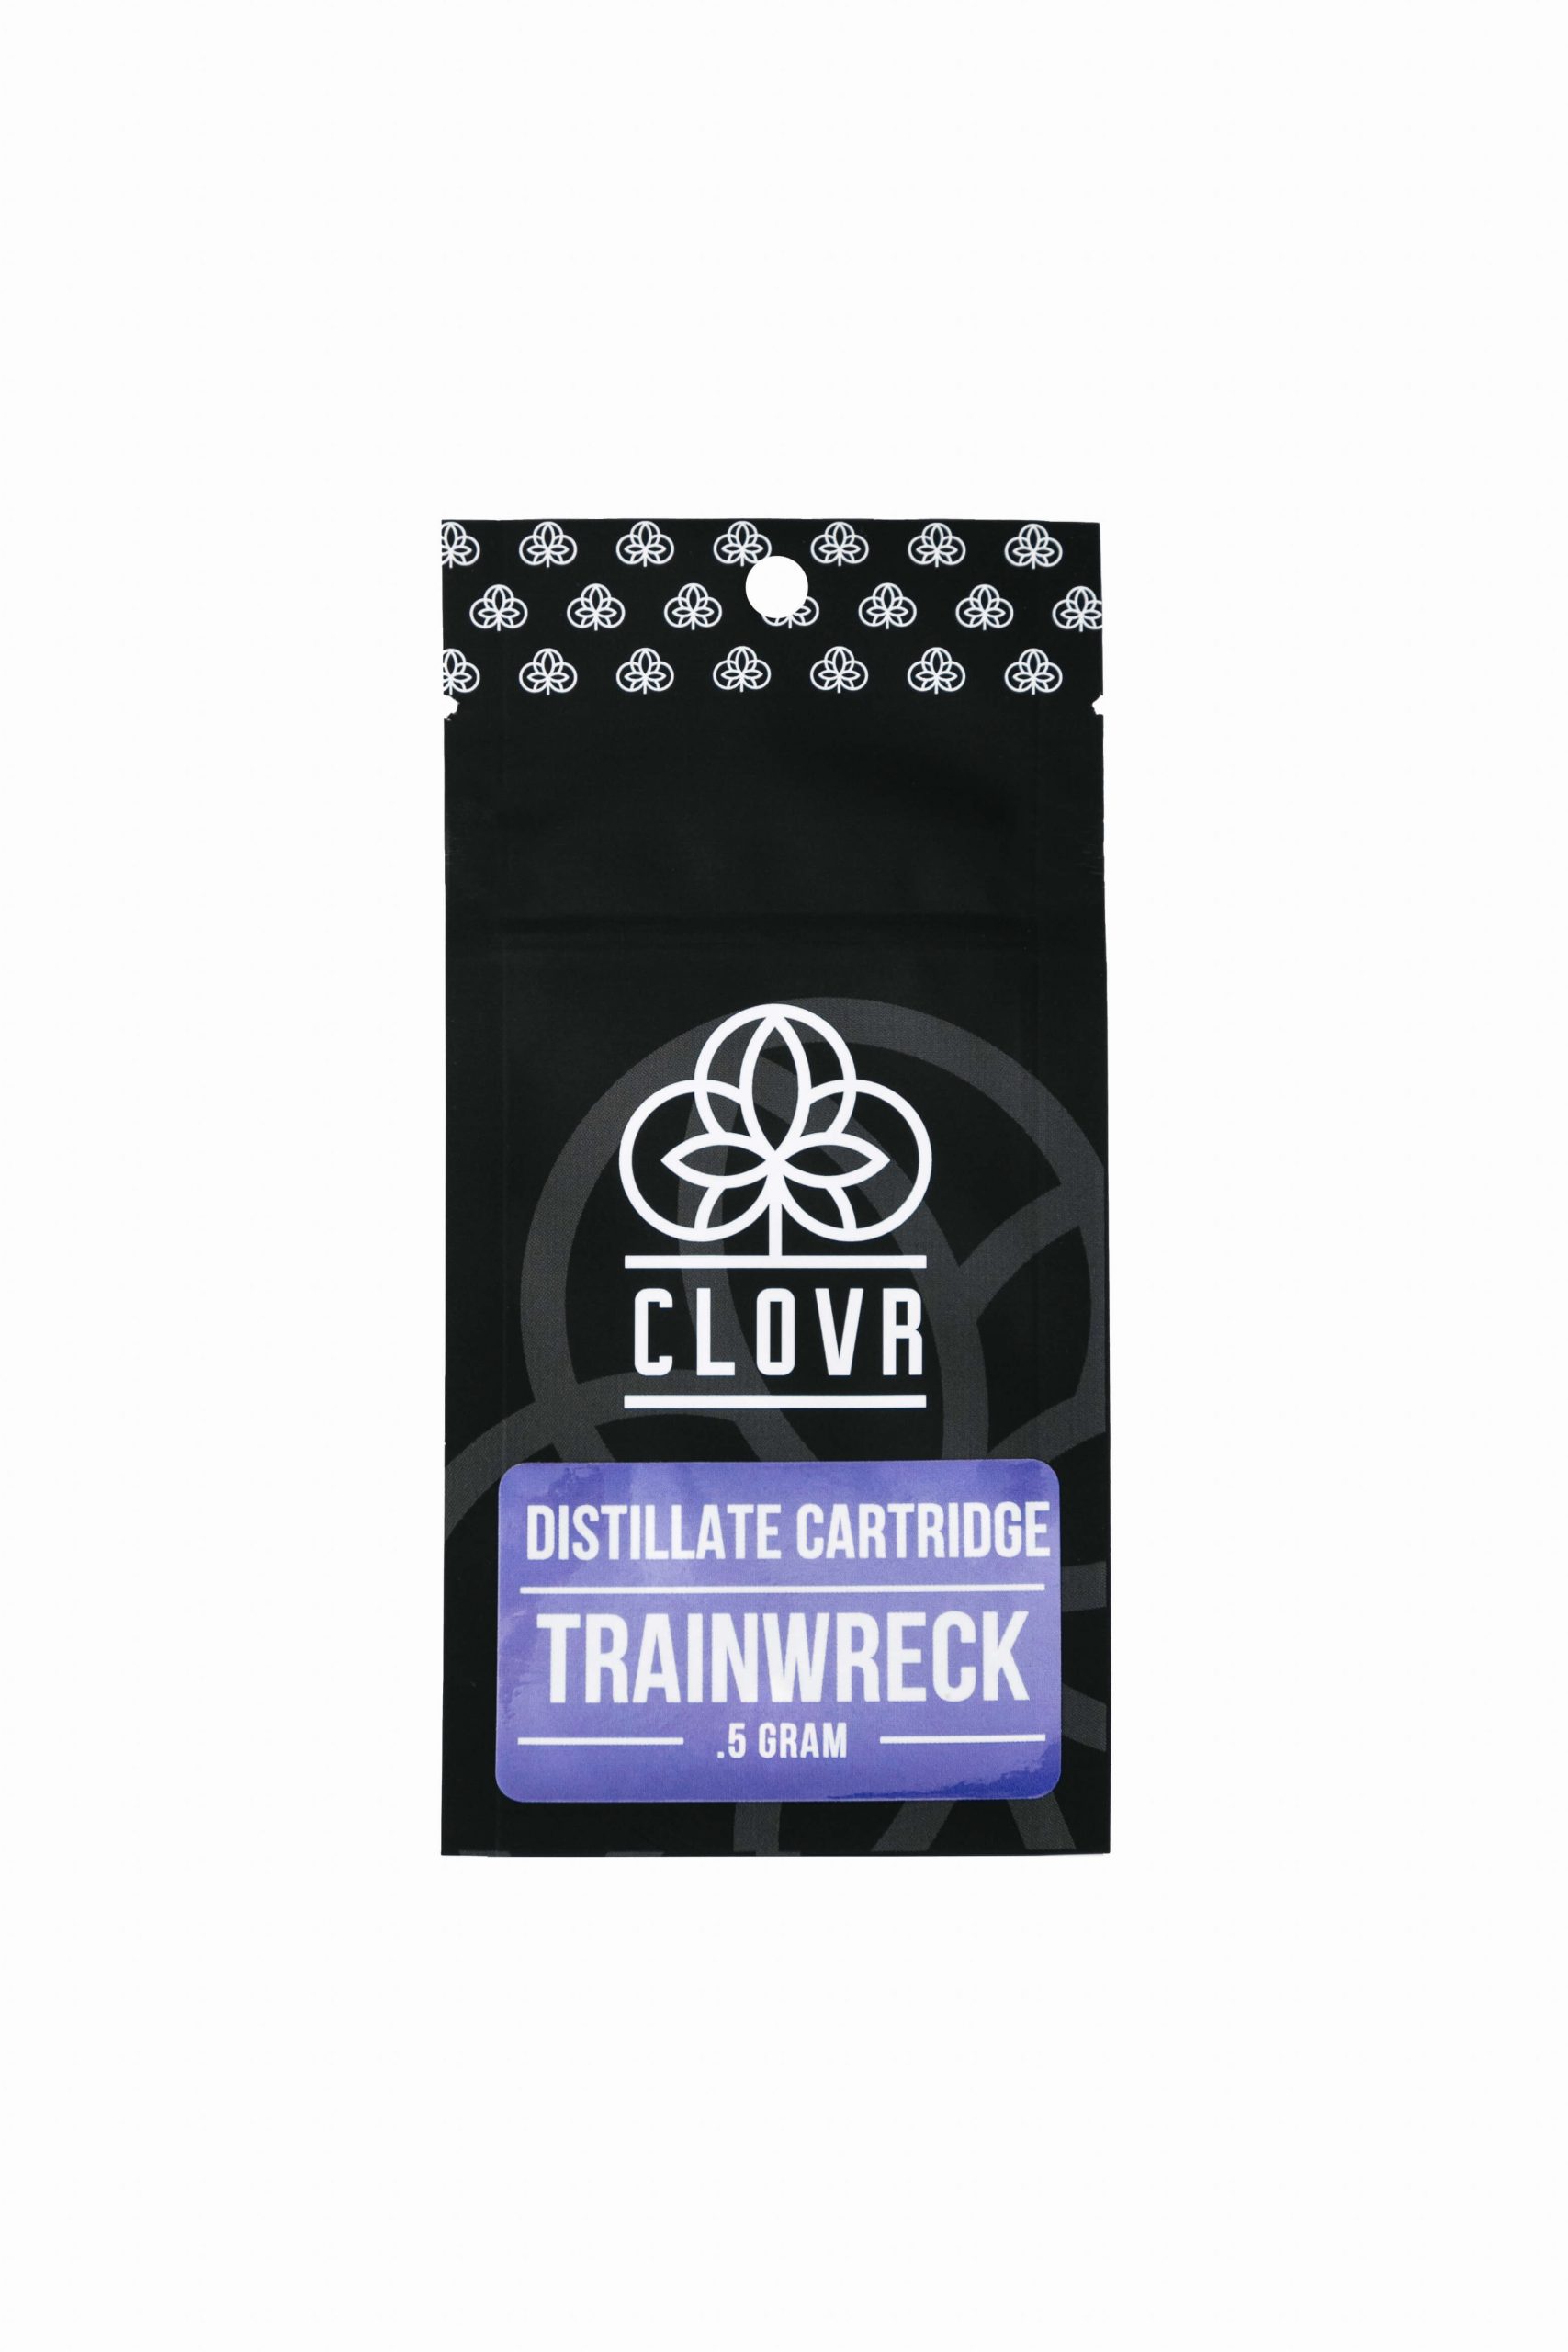 clovr marijuana distillate cartridge trainwreck packaging